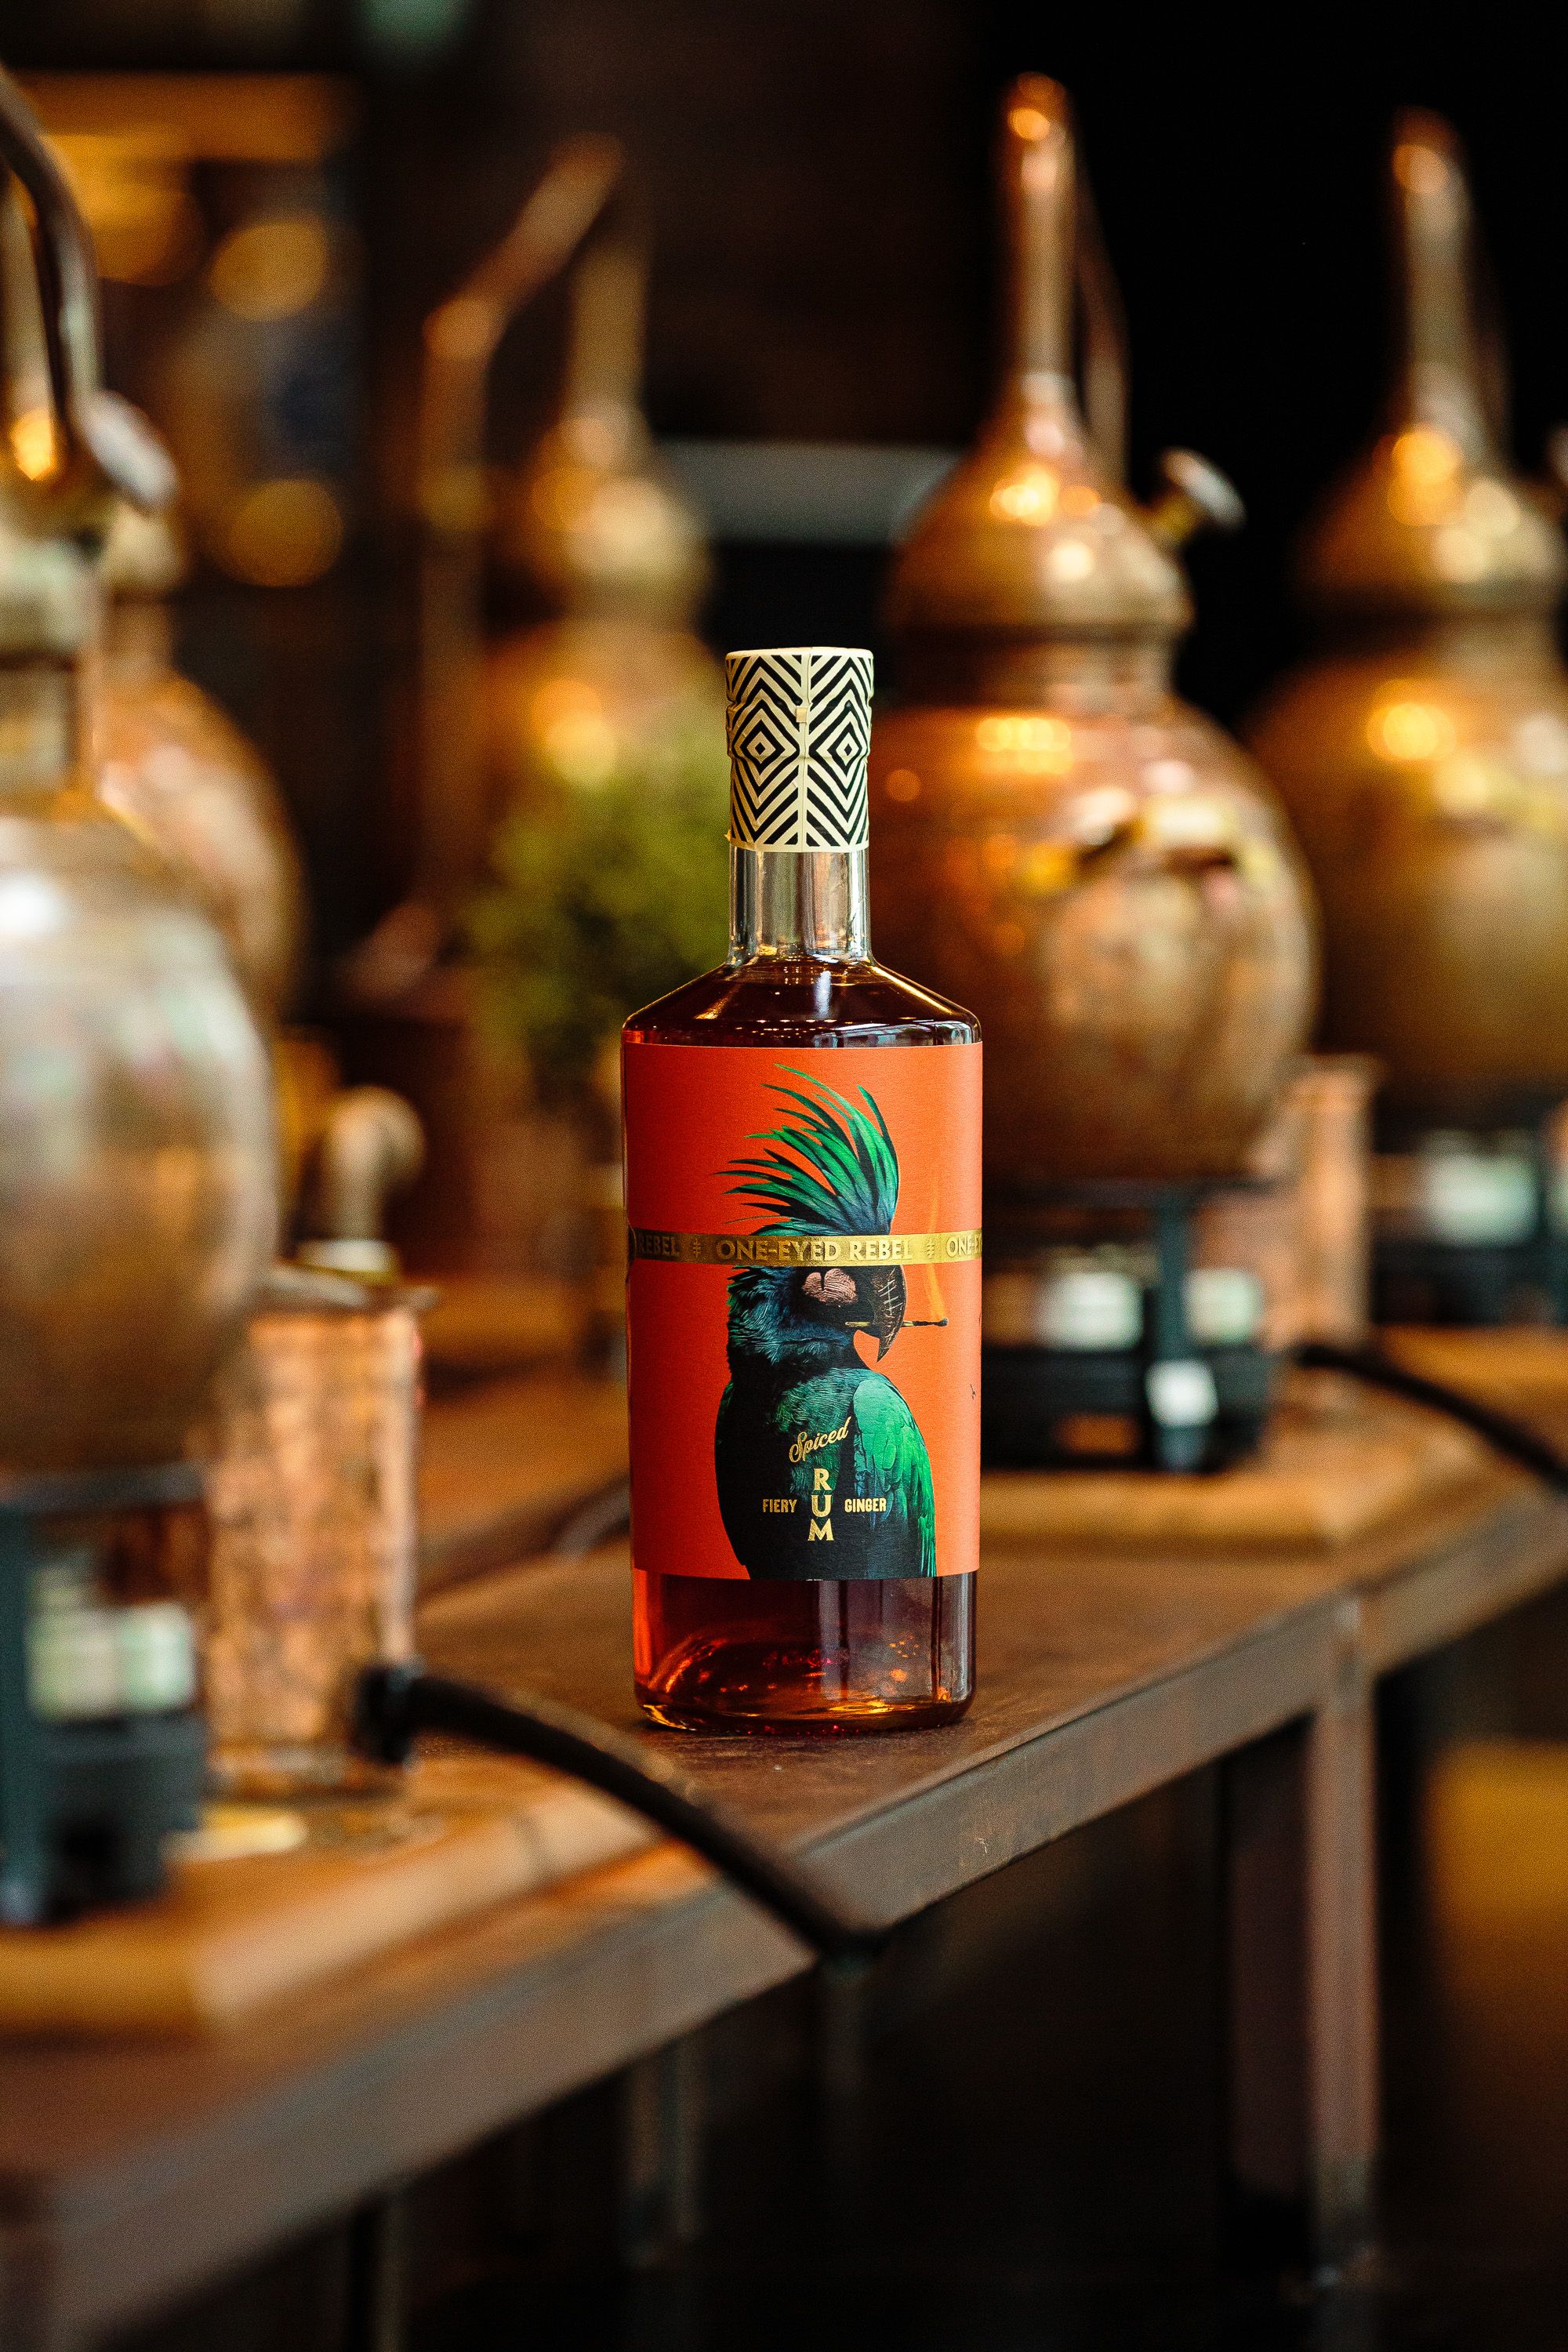 One-Eyed Rebel Botanical Spiced Rum